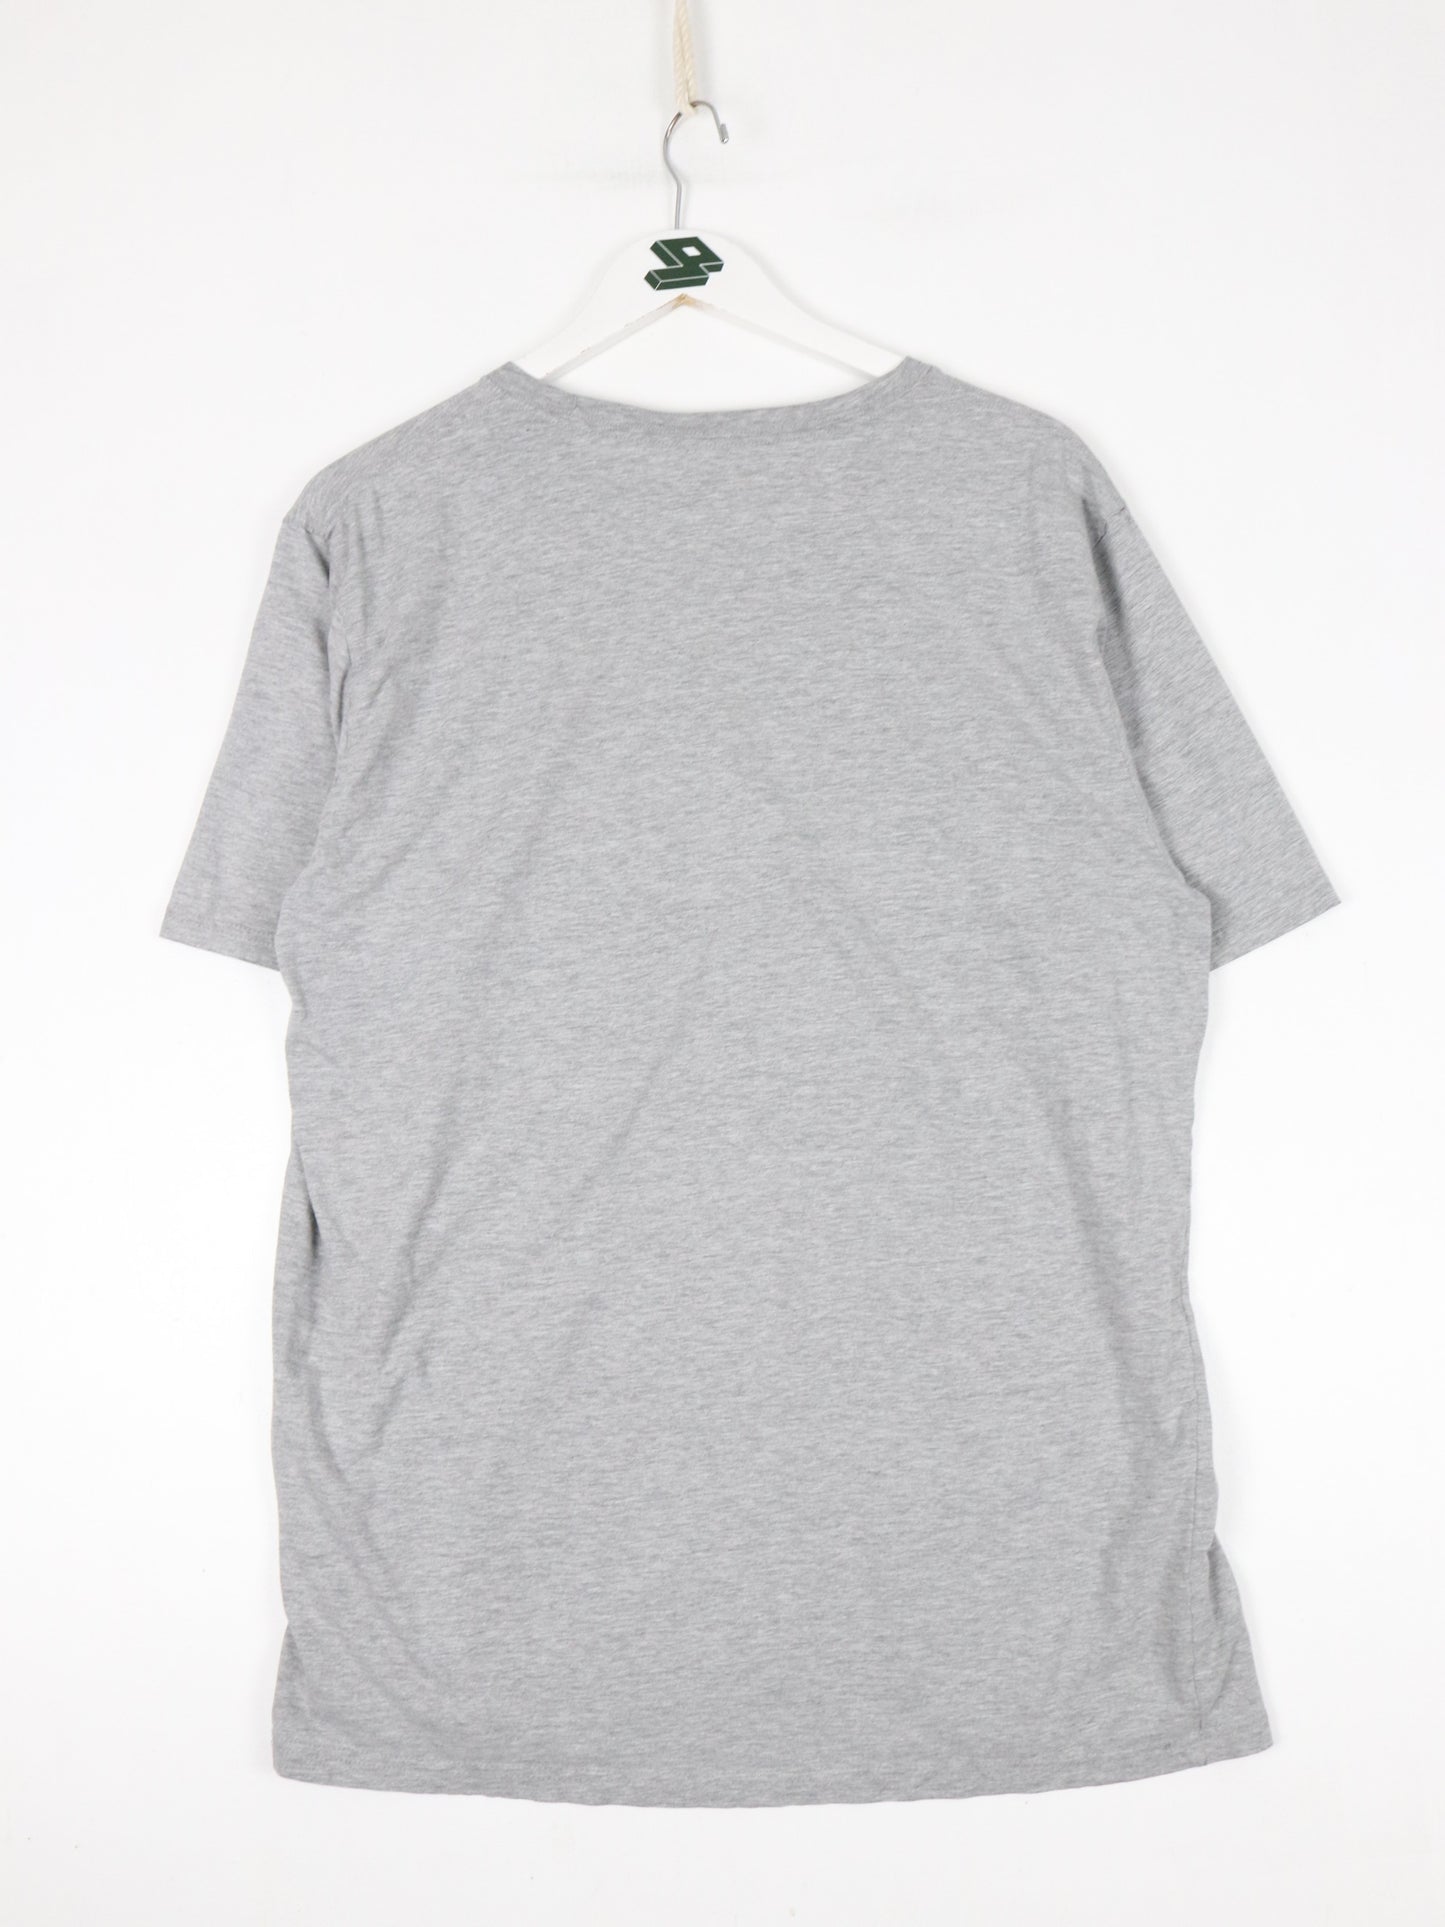 Oakley T Shirt Mens Large Grey Logo